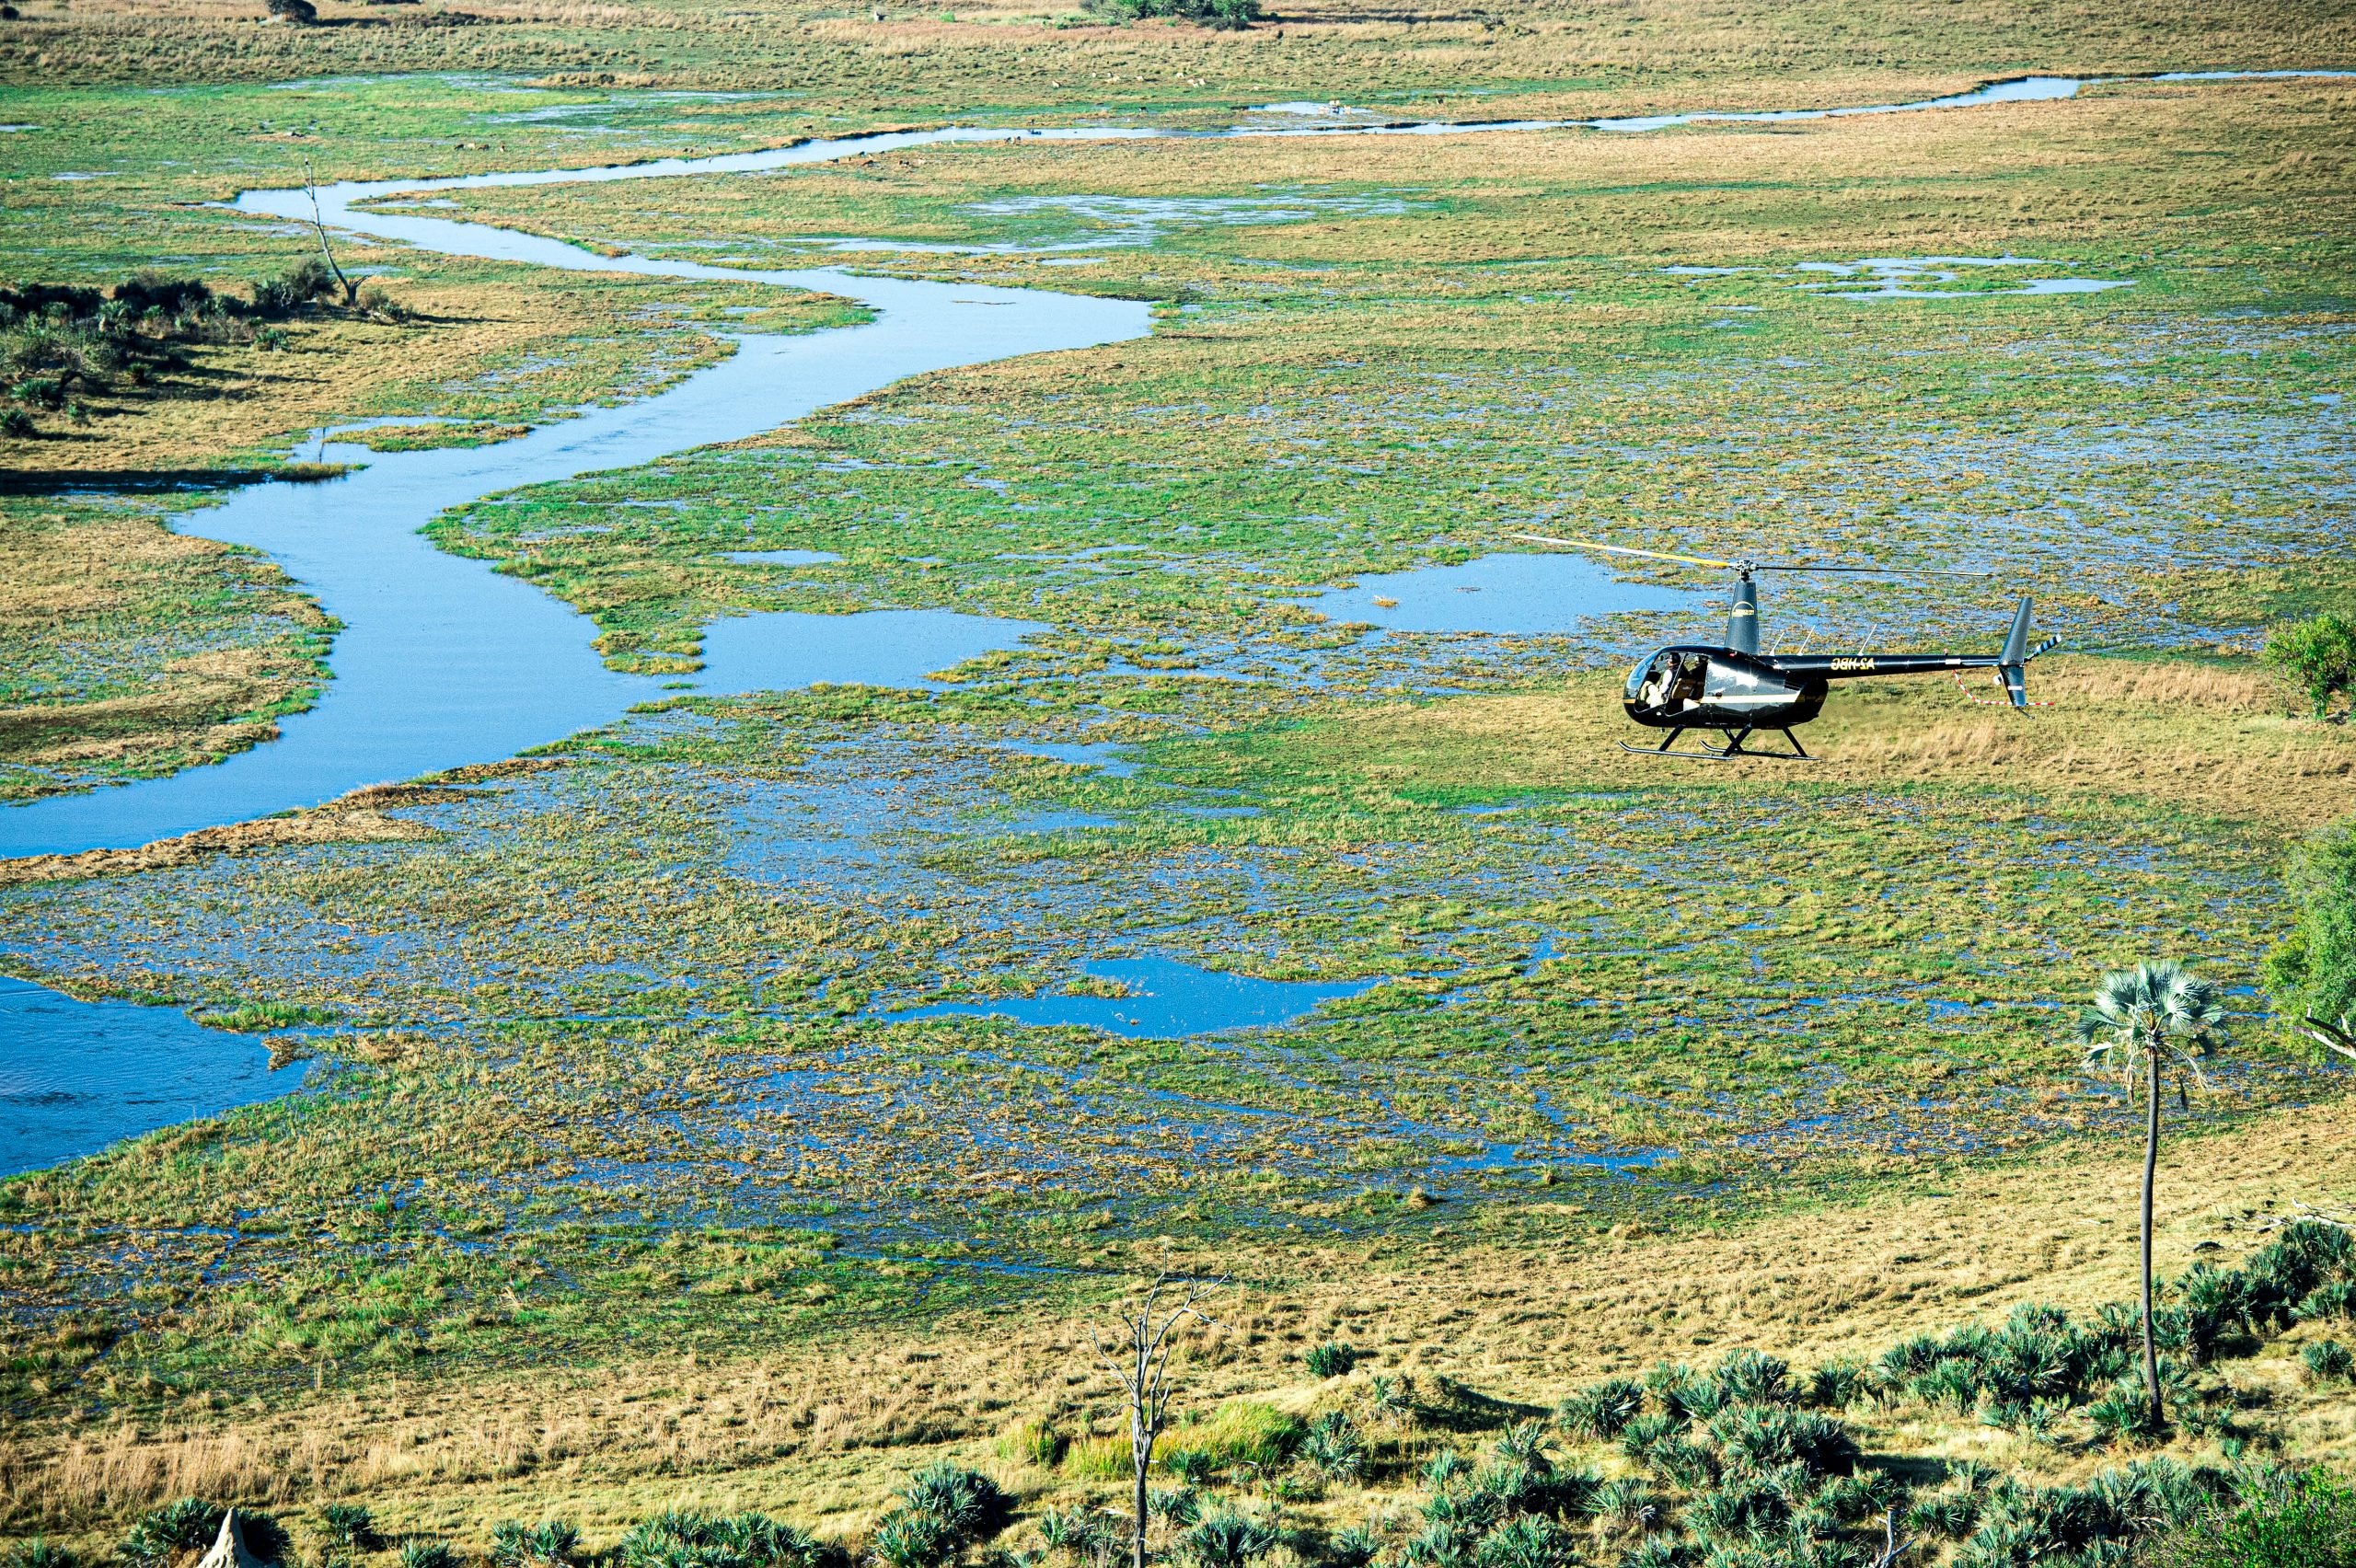 HelicopterHorizons_OkavangoDelta_Botswana_(c)marcstickler-196